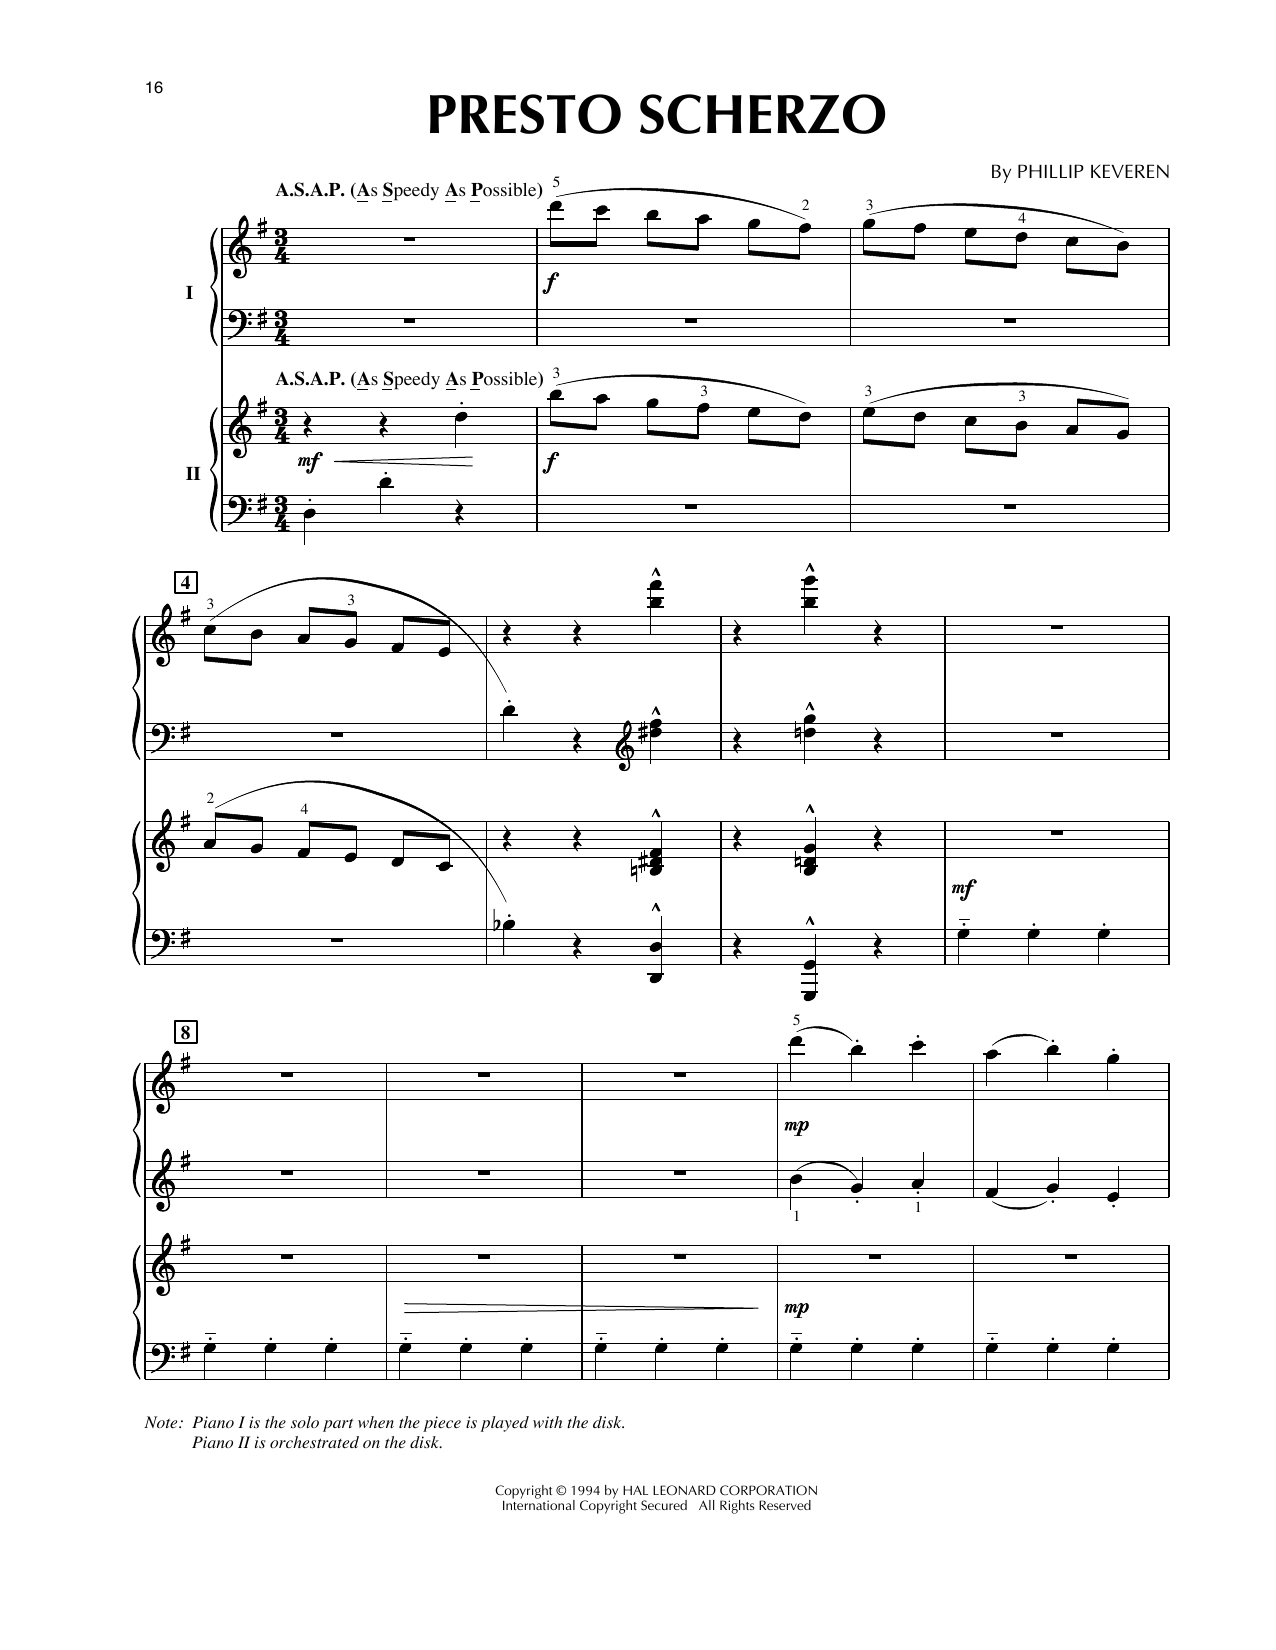 Phillip Keveren Presto Scherzo (from Presto Scherzo) (for 2 pianos) Sheet Music Notes & Chords for Piano Duet - Download or Print PDF